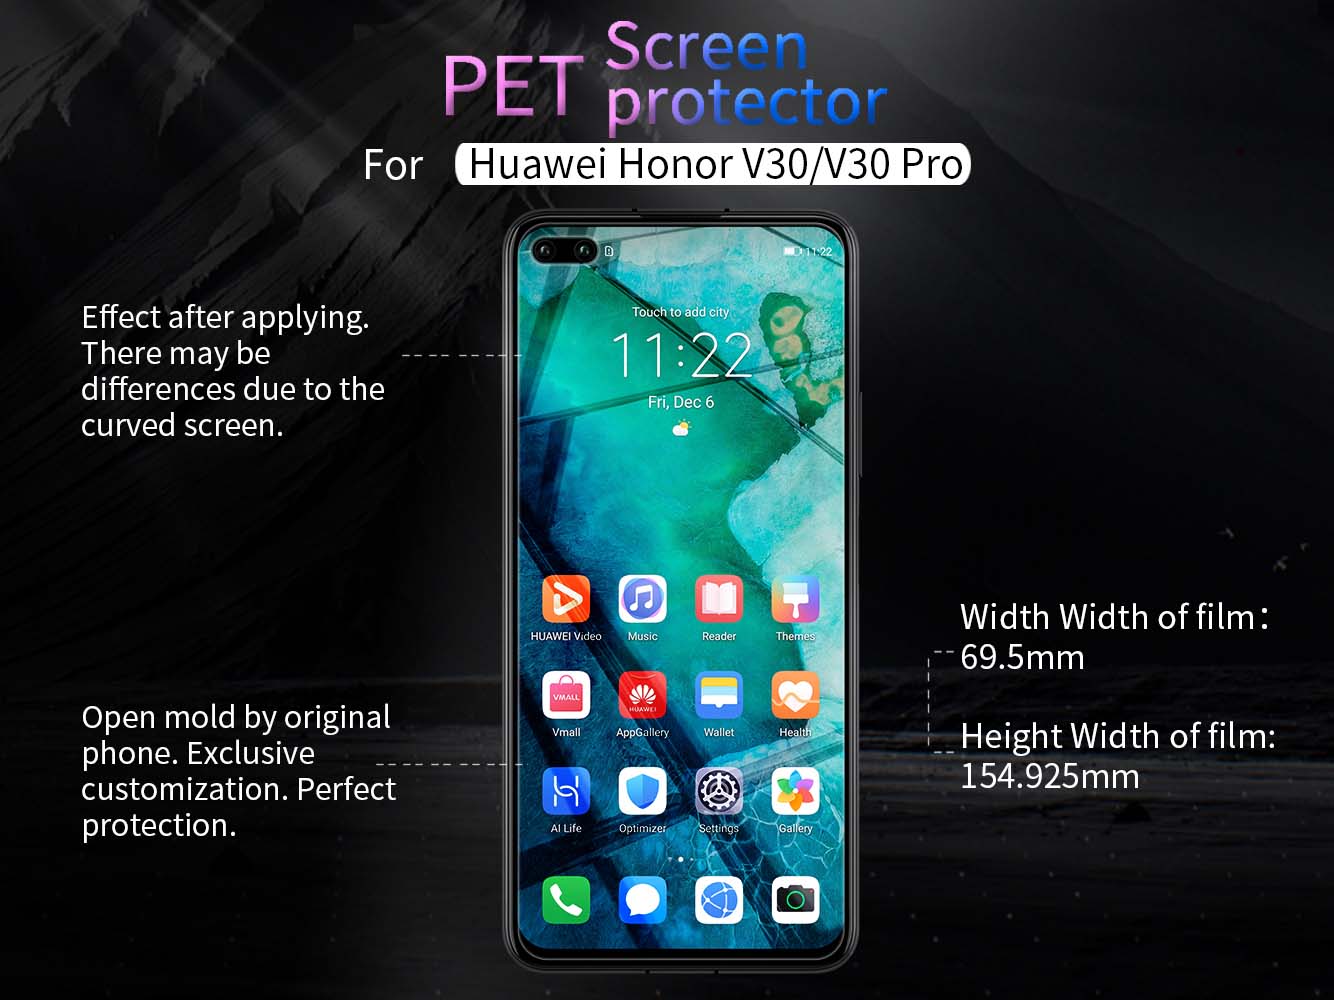 HUAWEI Honor V30 screen protector